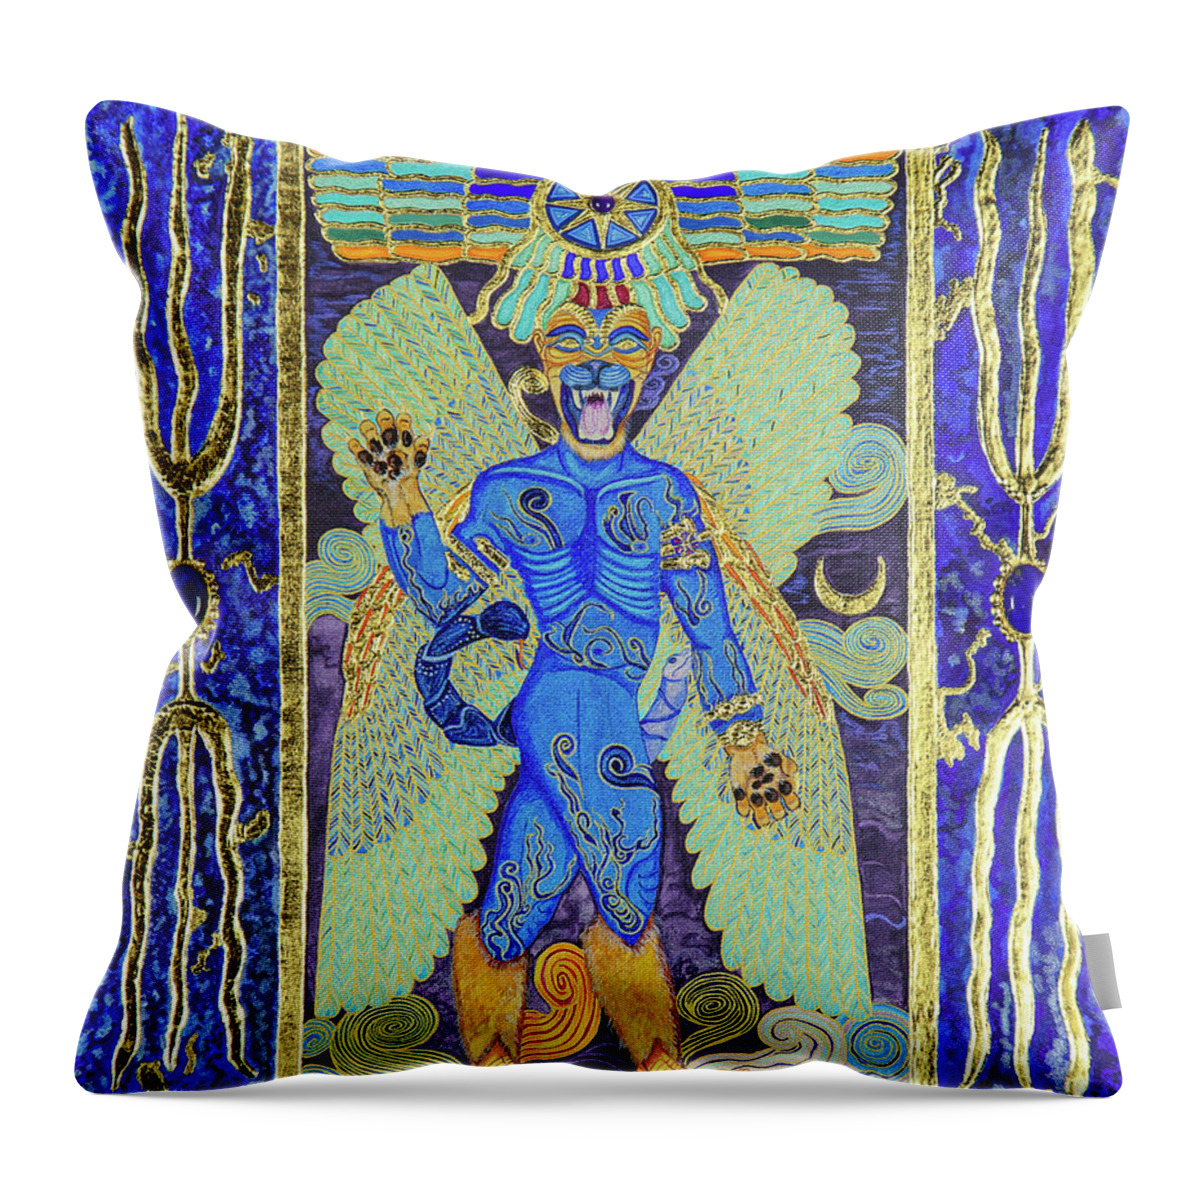 Babylon Throw Pillow featuring the mixed media Pazuzu the Divine Exorcist by Ptahmassu Nofra-Uaa